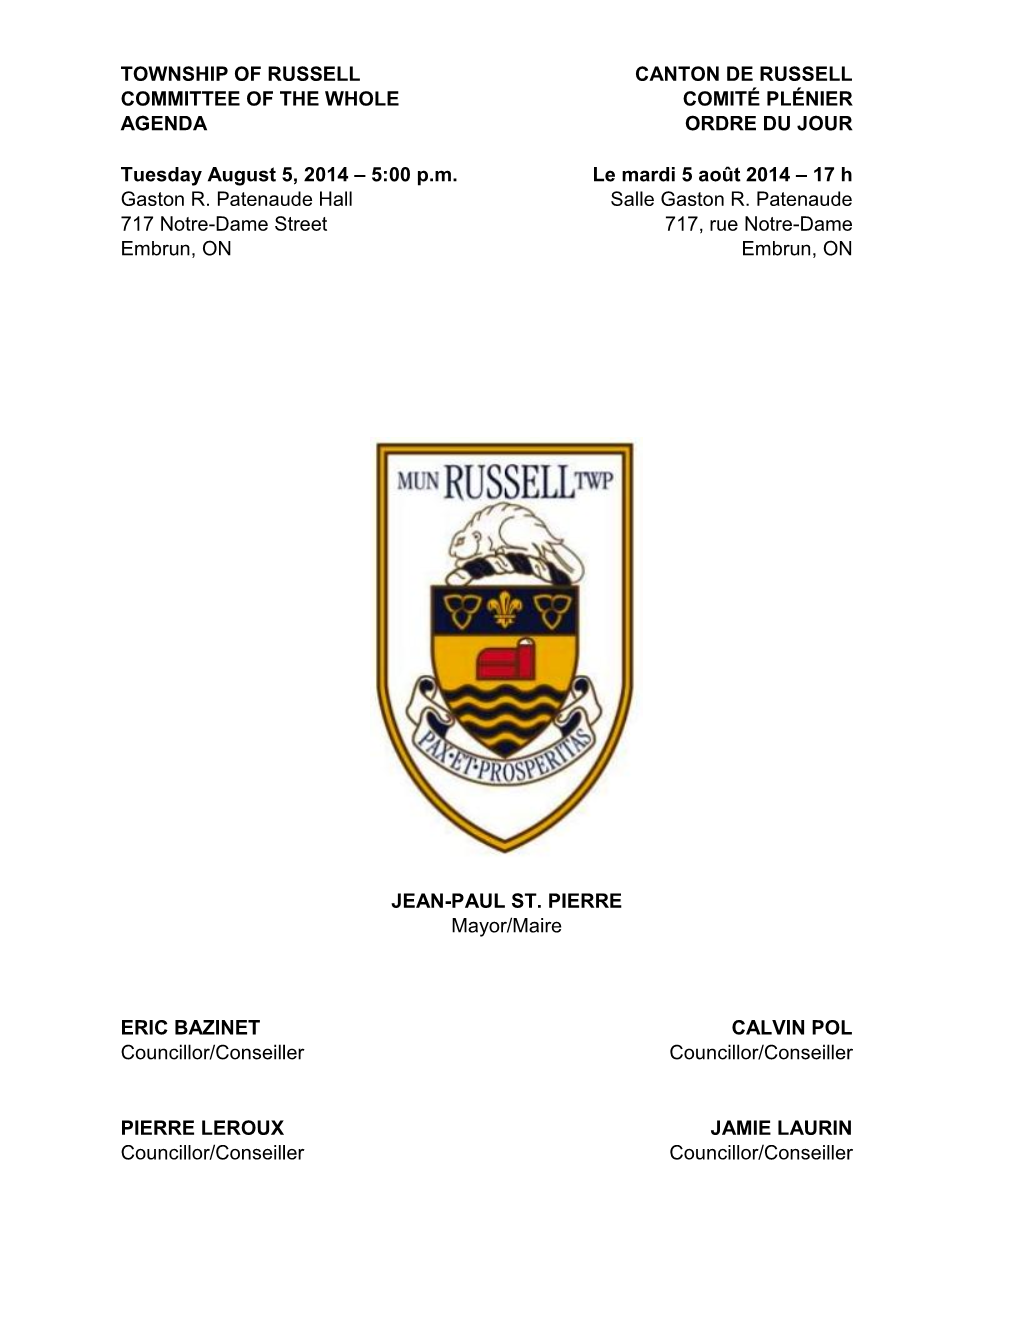 Township of Russell Committee of the Whole Comité Plénier Du Conseil Municipal Du Canton De Russell AGENDA / ORDRE DU JOUR Tuesday August 5, 2014 at 5:00 P.M